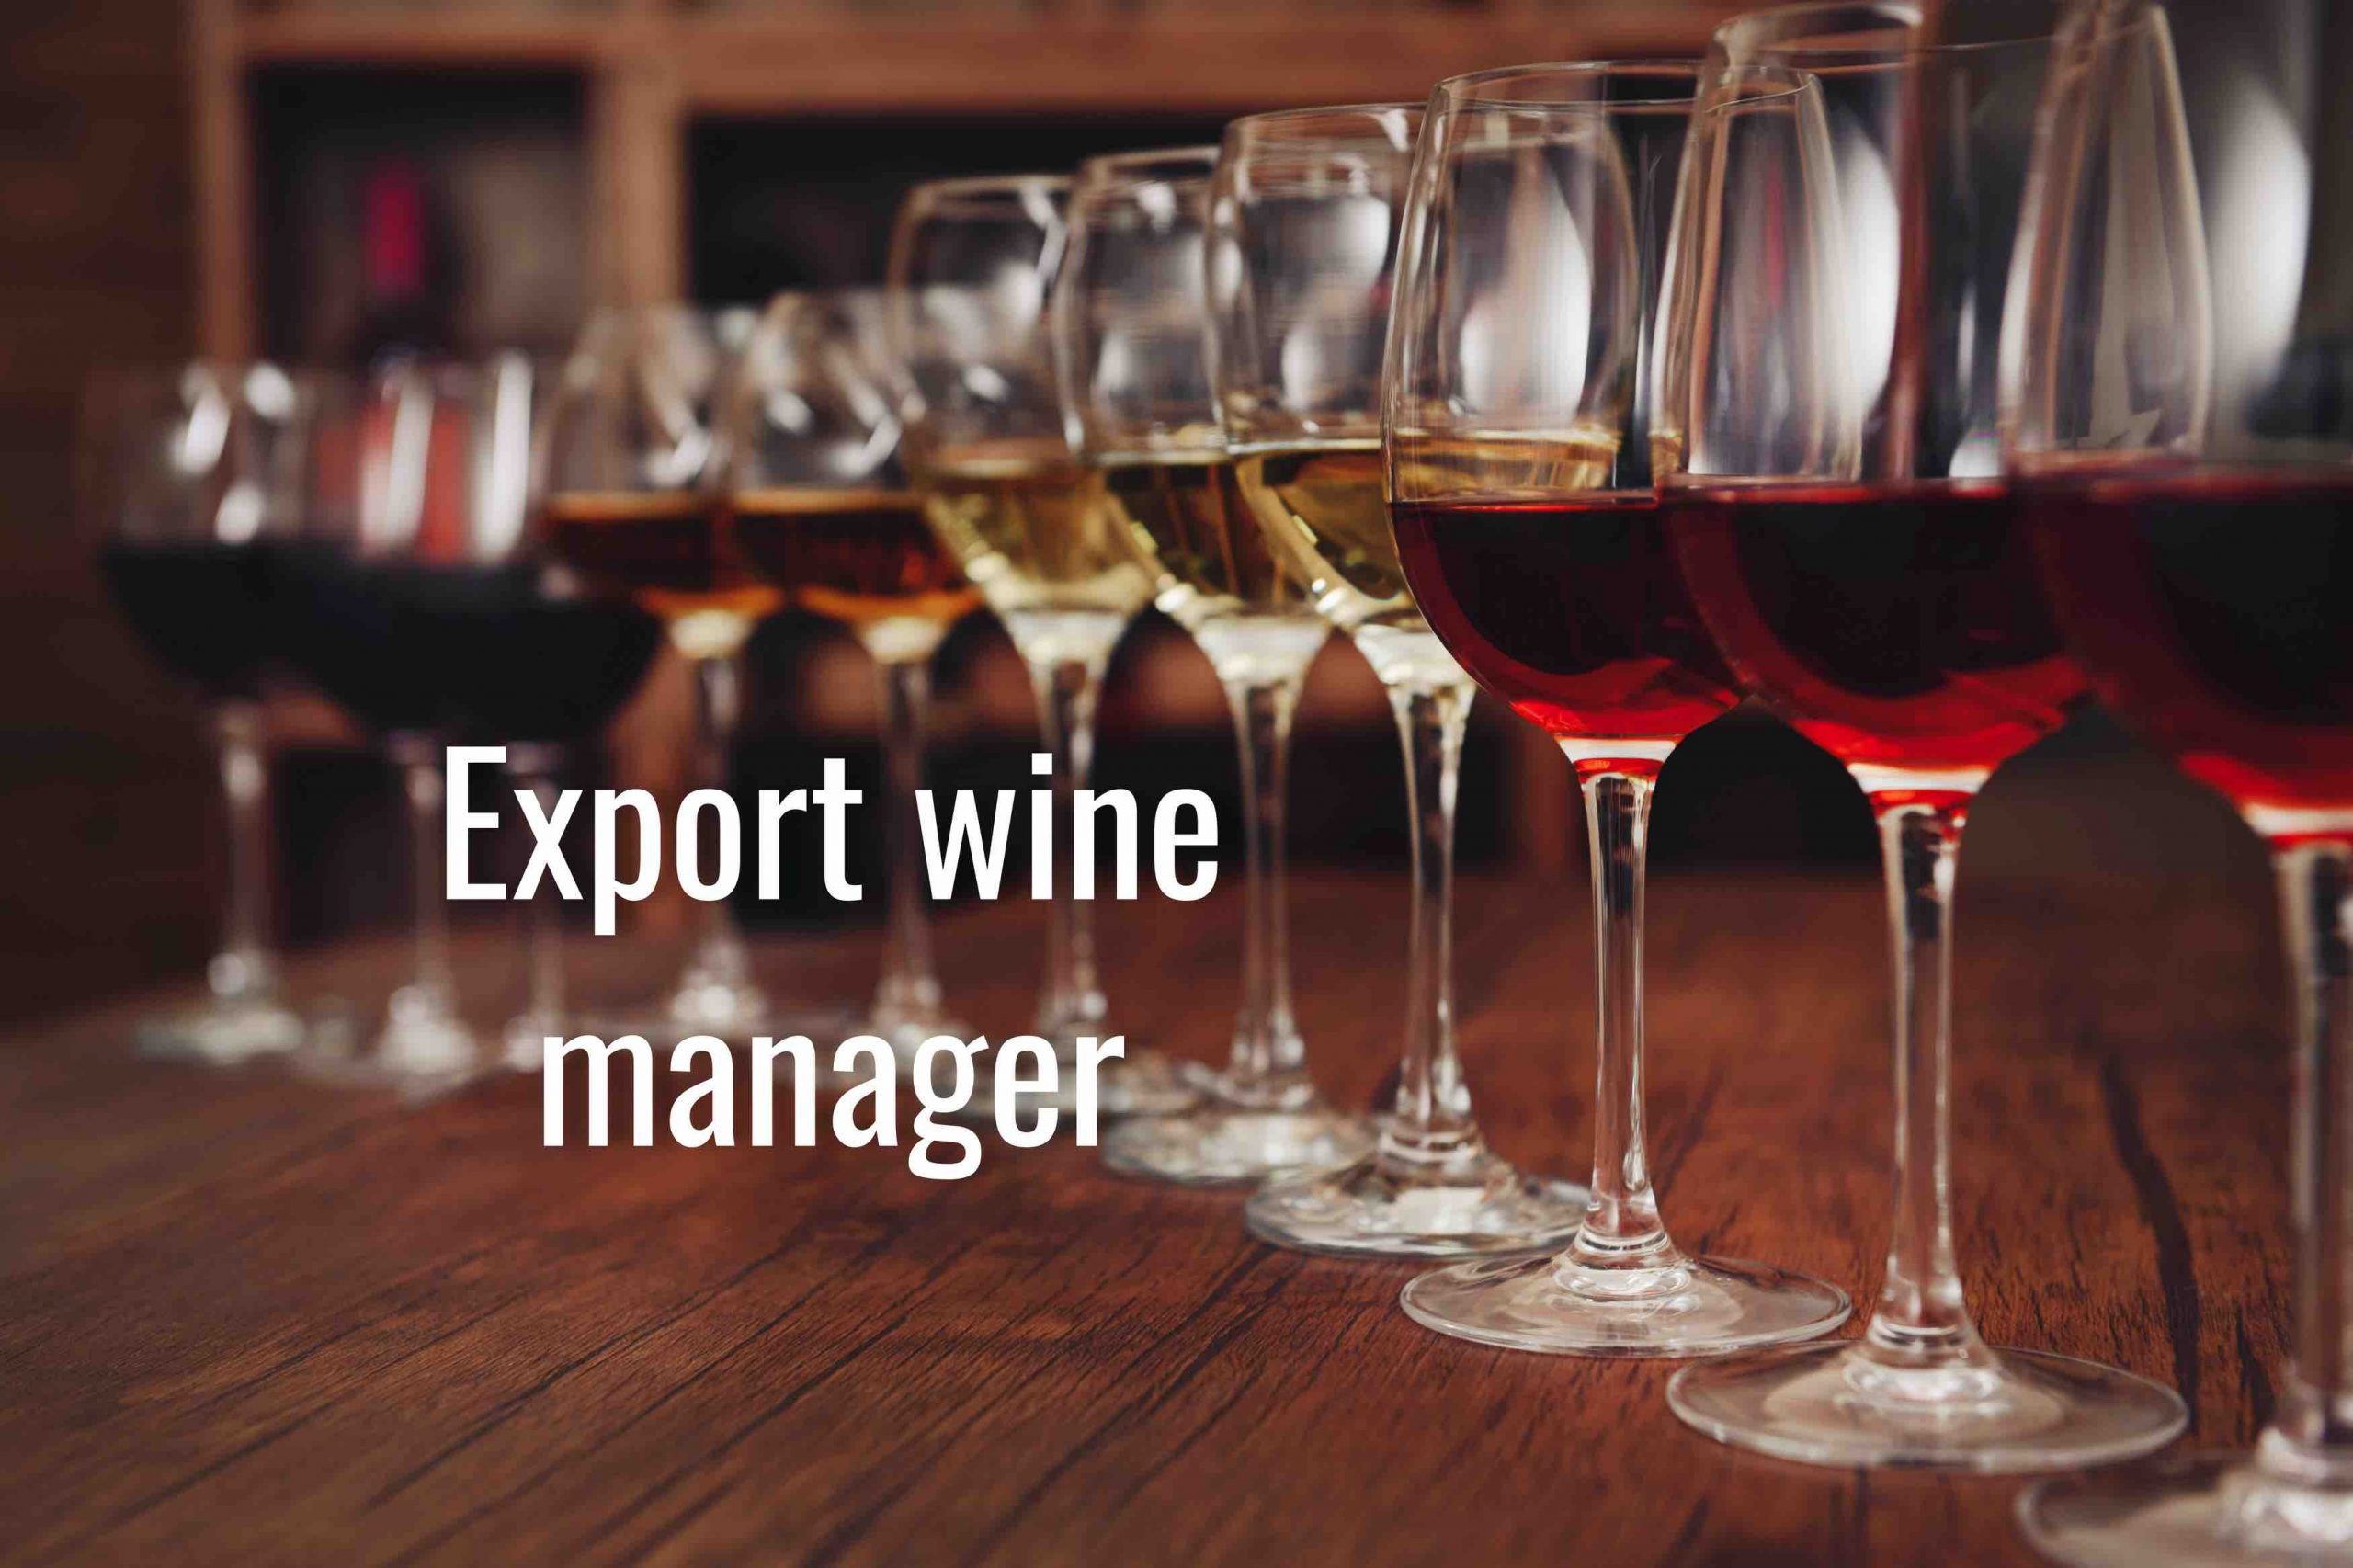 diventare export wine manager a bologna